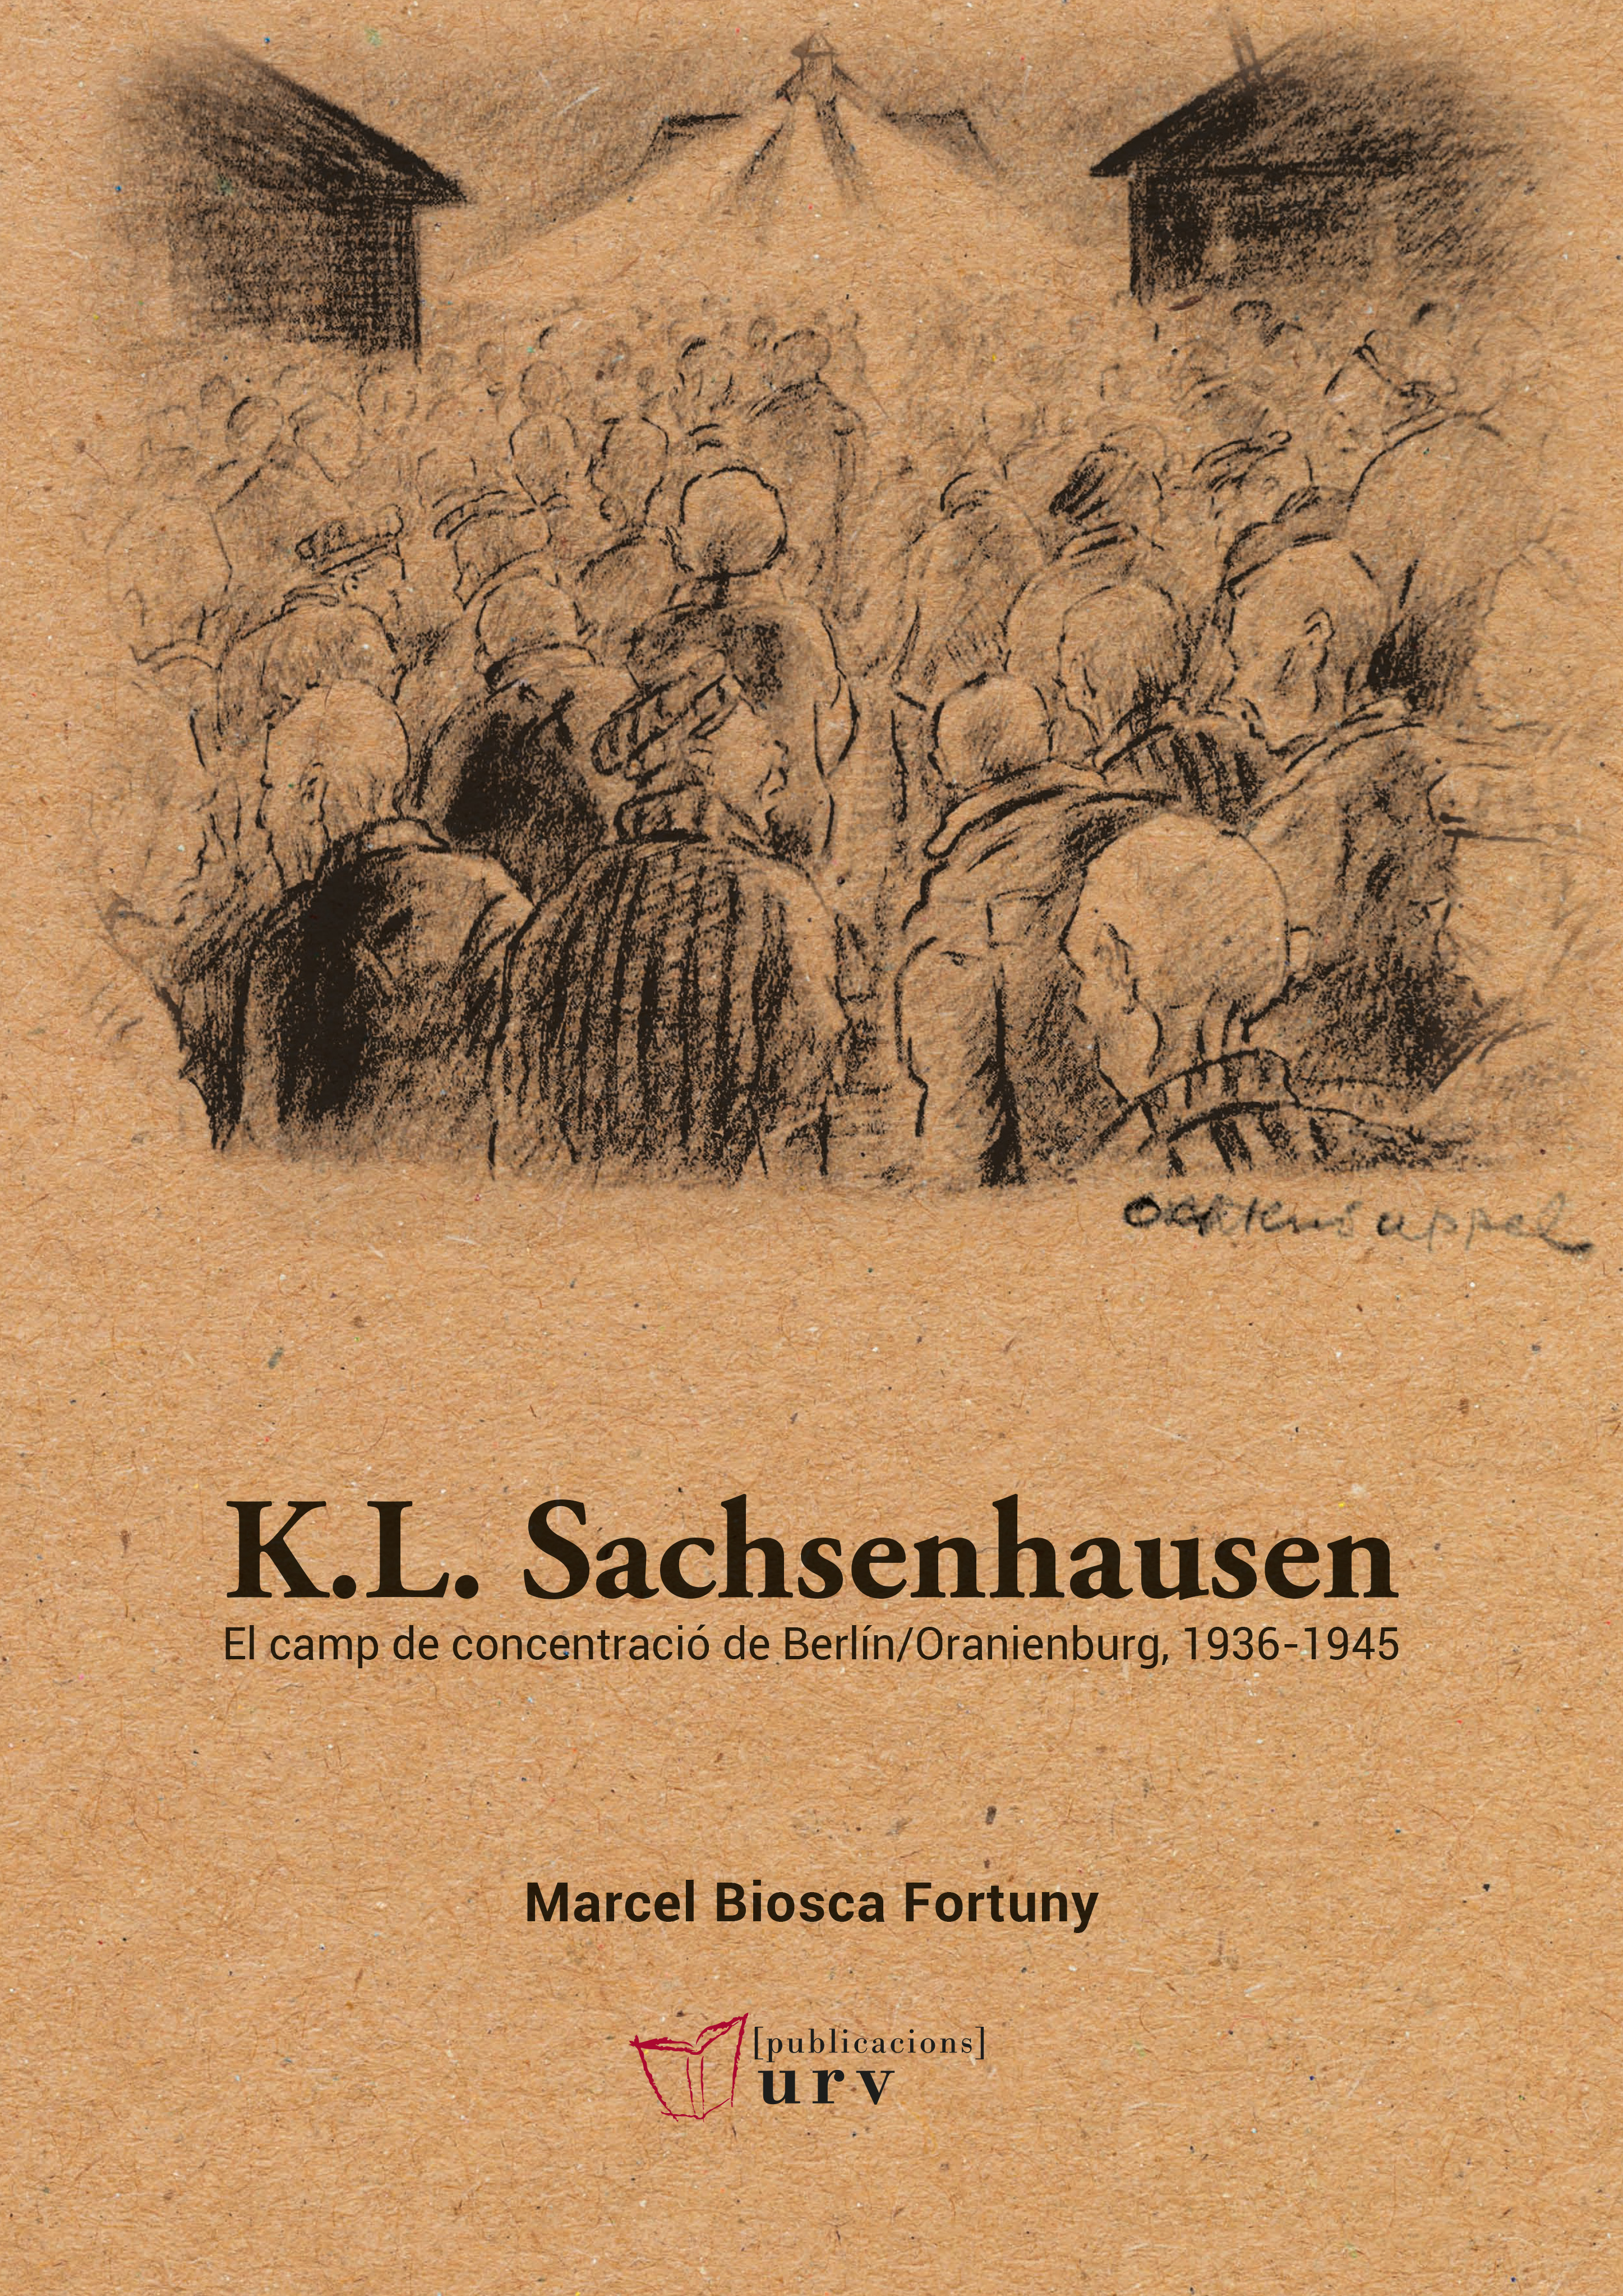 K.L. Sachsenhausen